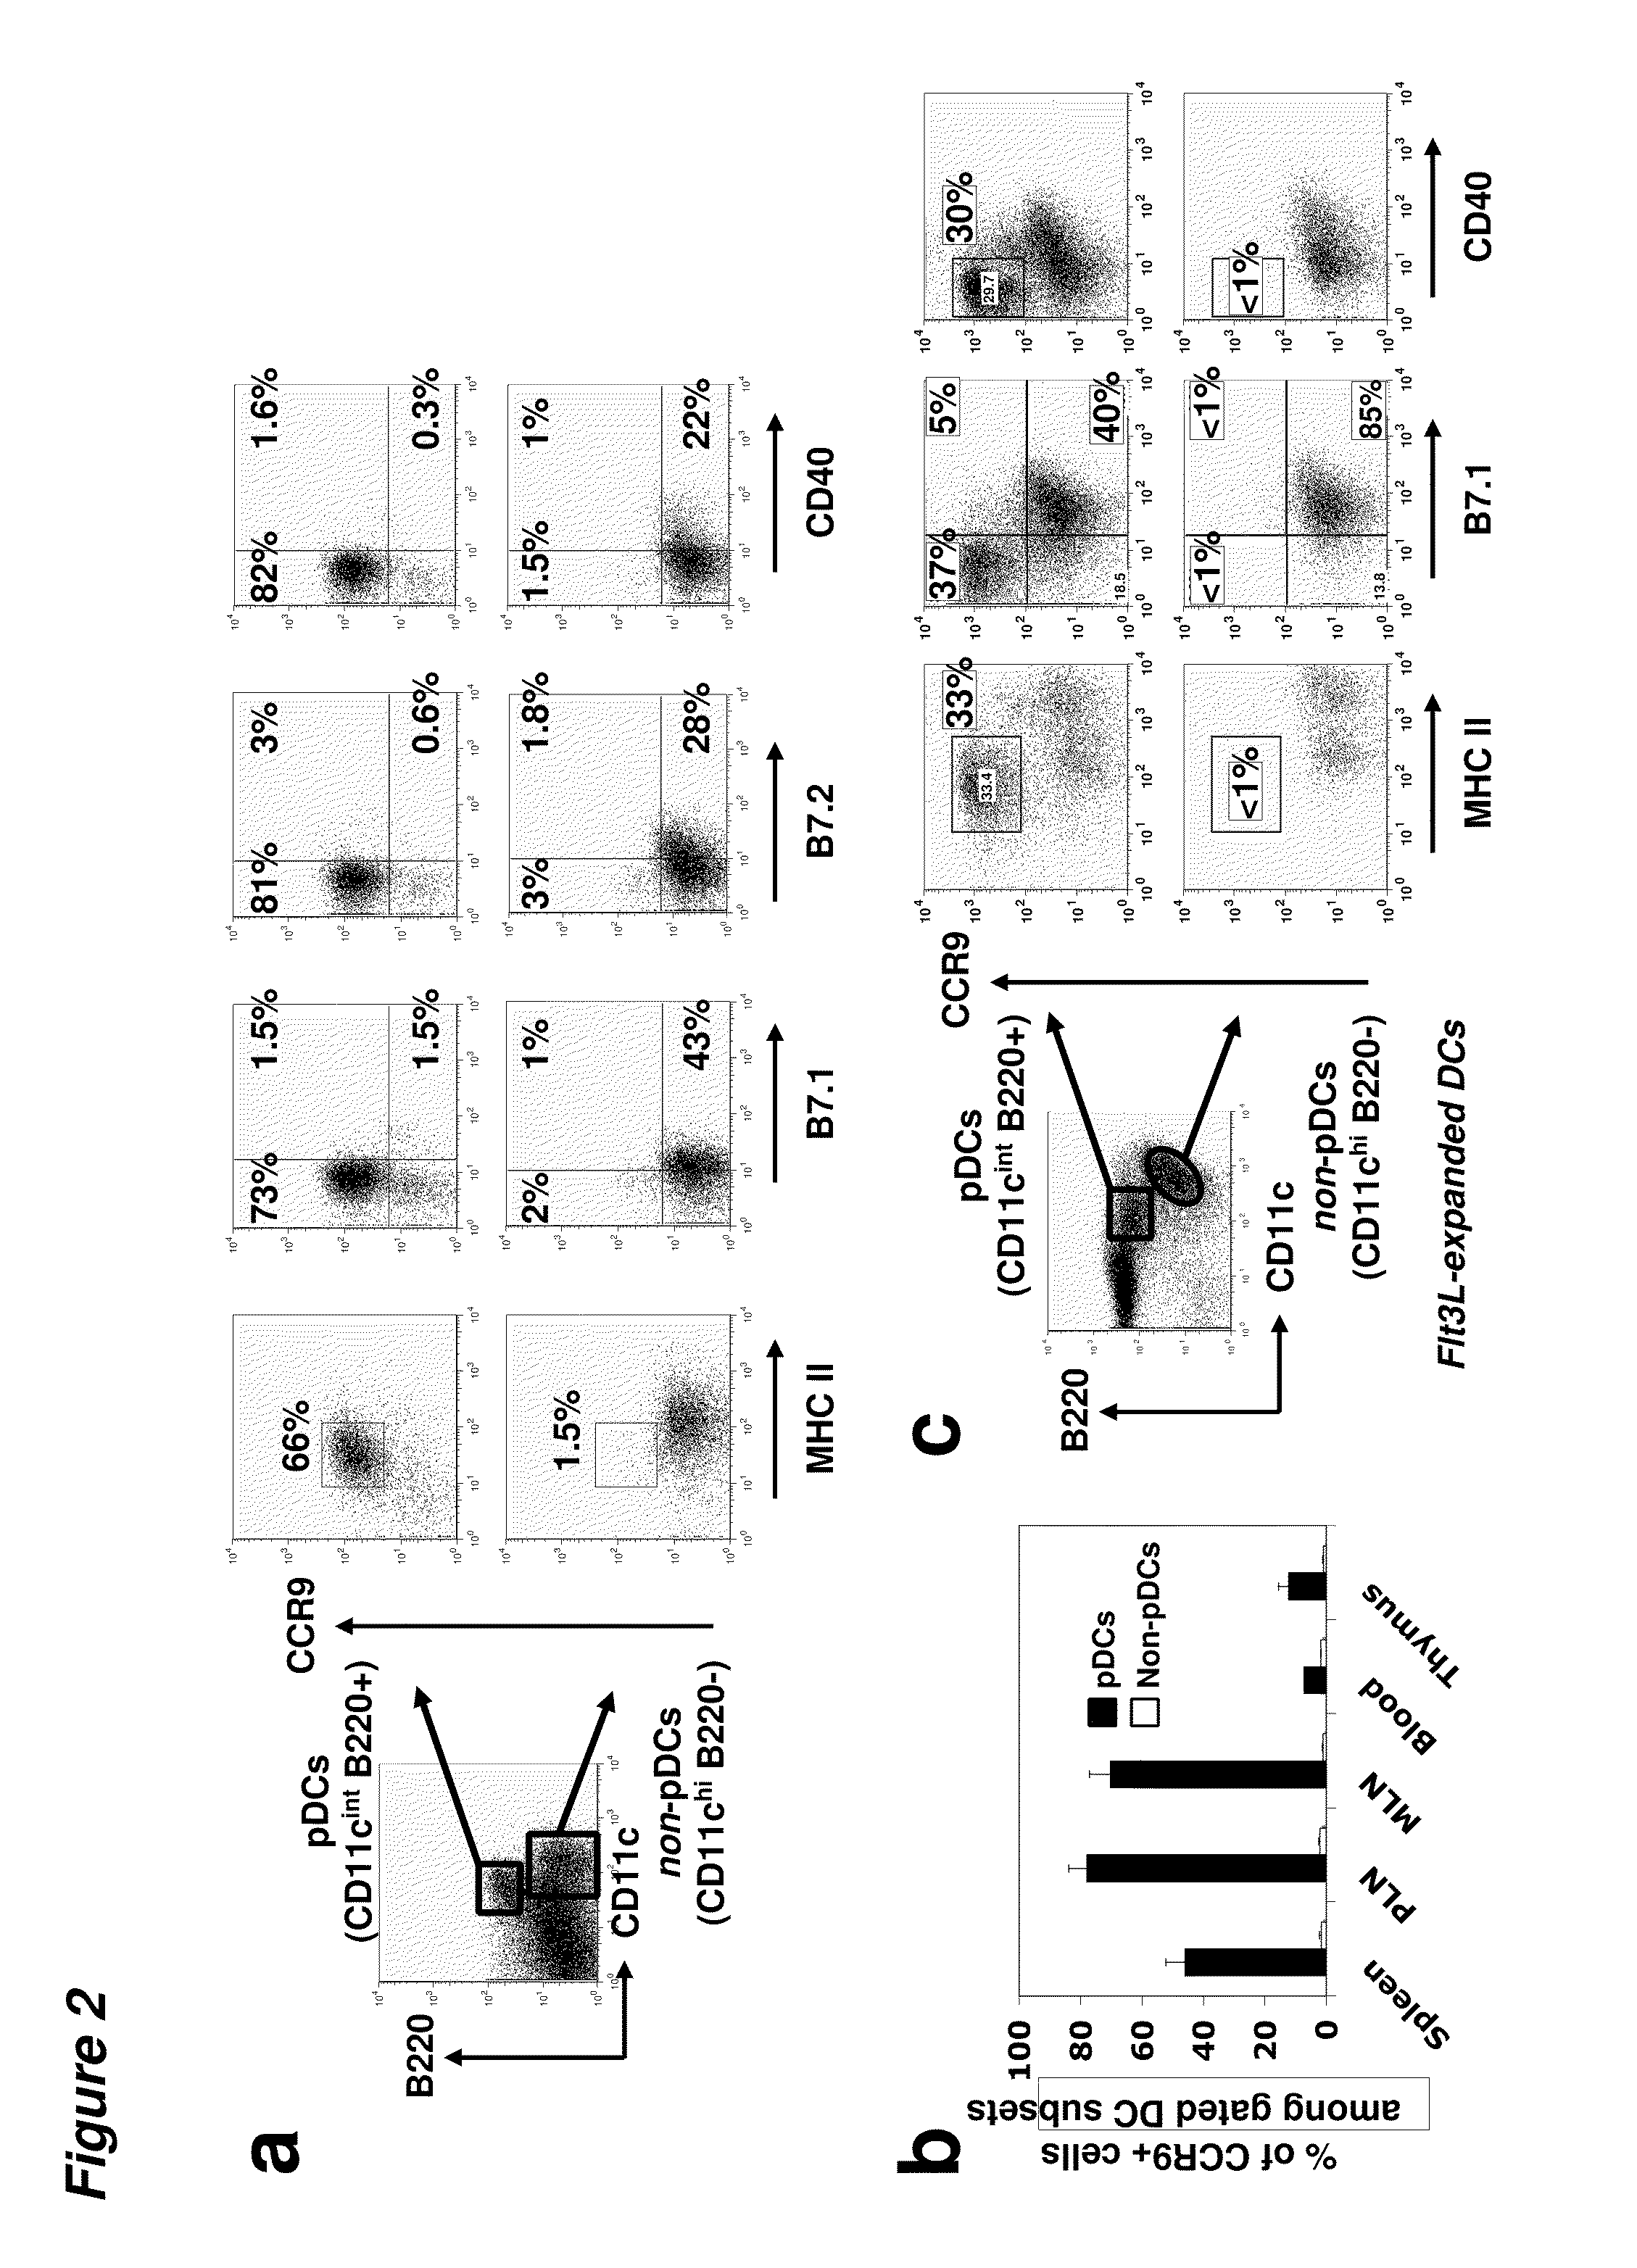 Tolerogenic populations of dendritic cells